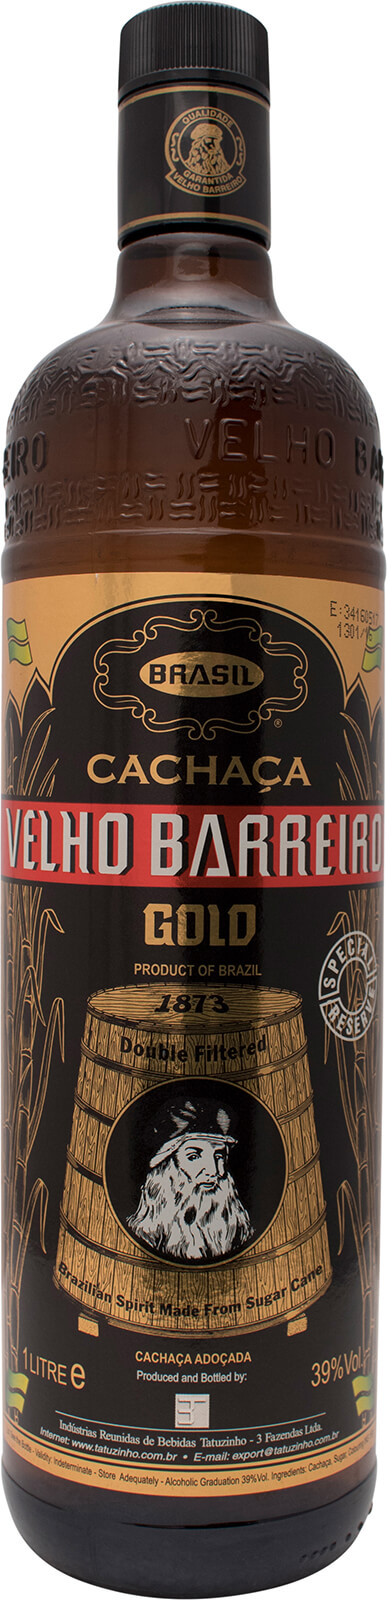 Velho Barreiro Cachaca Liter 1 (3 Jahre) Gold 39